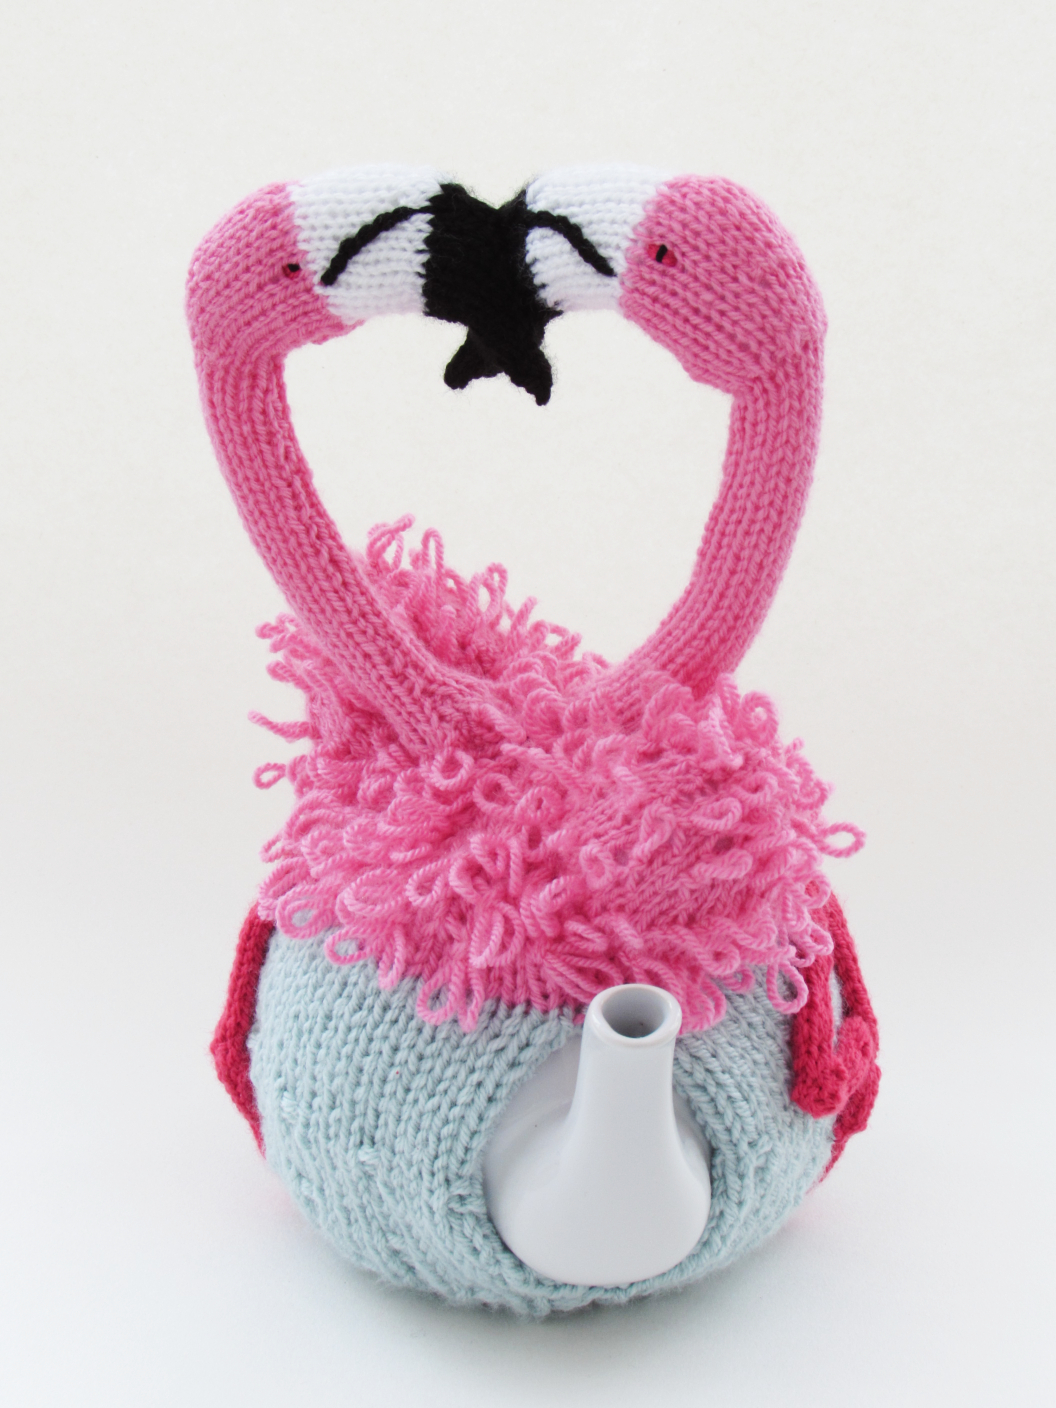 Flamingo knitting pattern